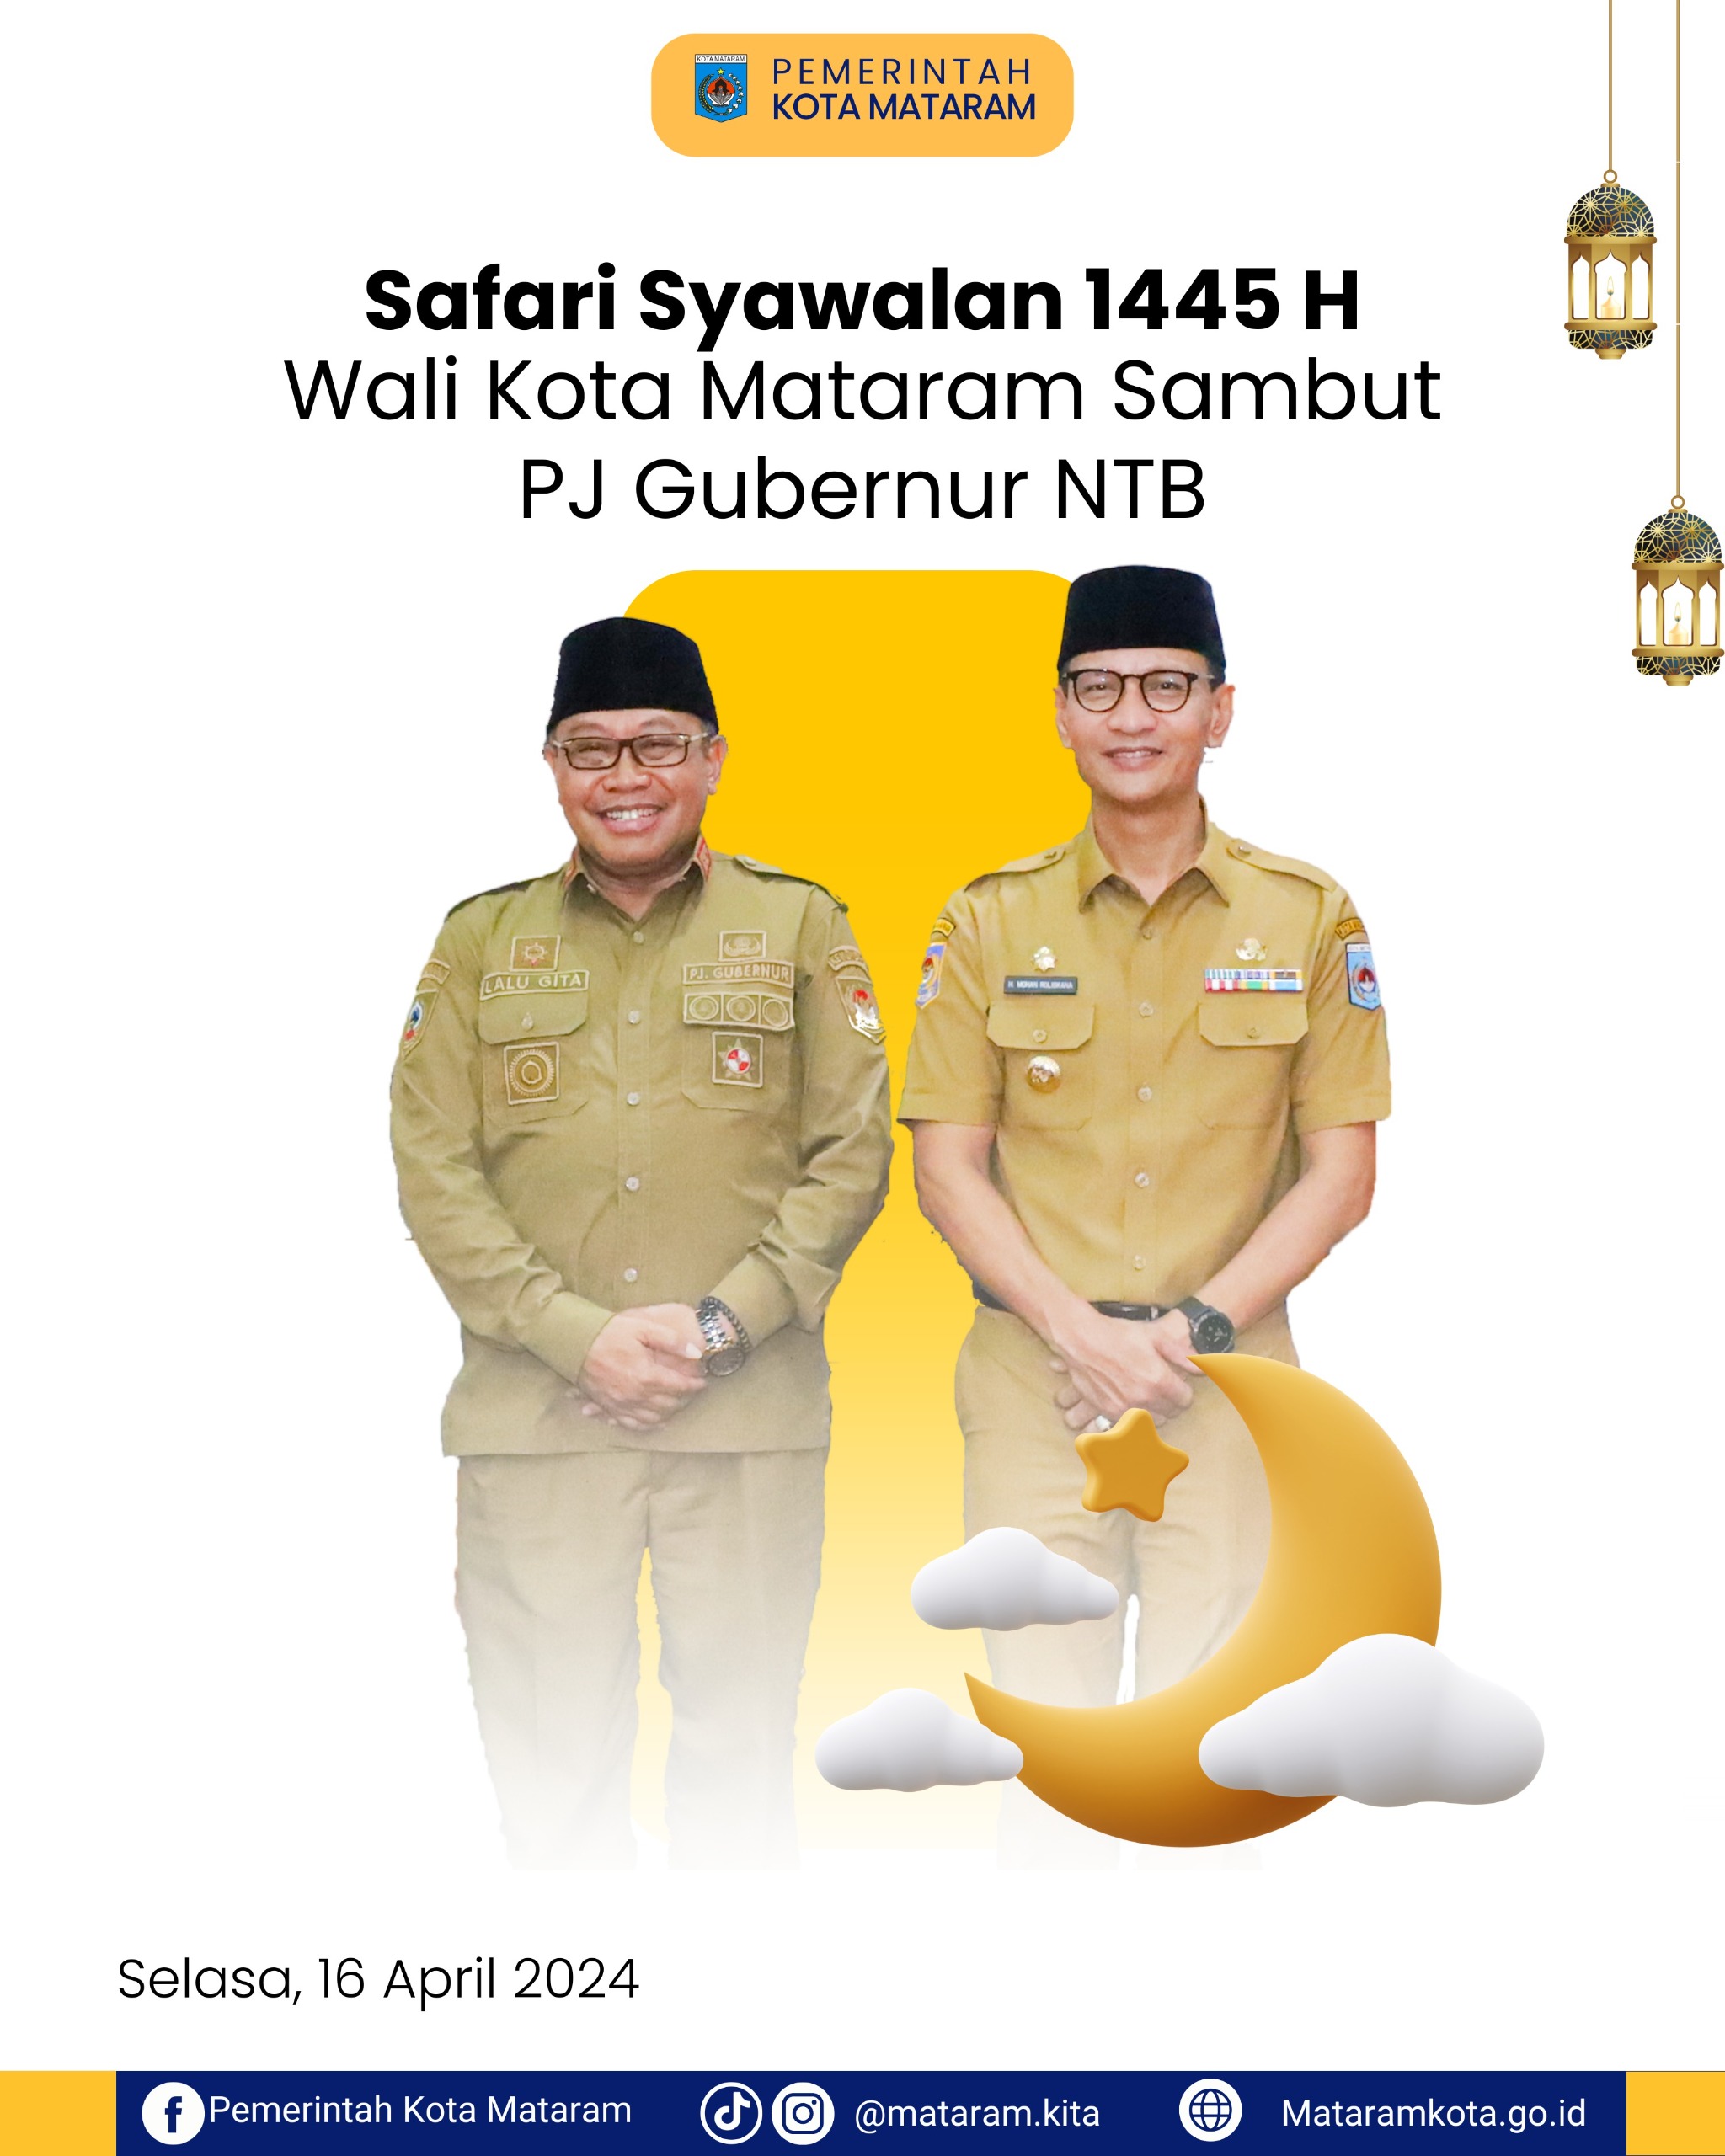 Safari Syawalan 1445 H, Wali Kota Mataram Sambut PJ Gubernur NTB